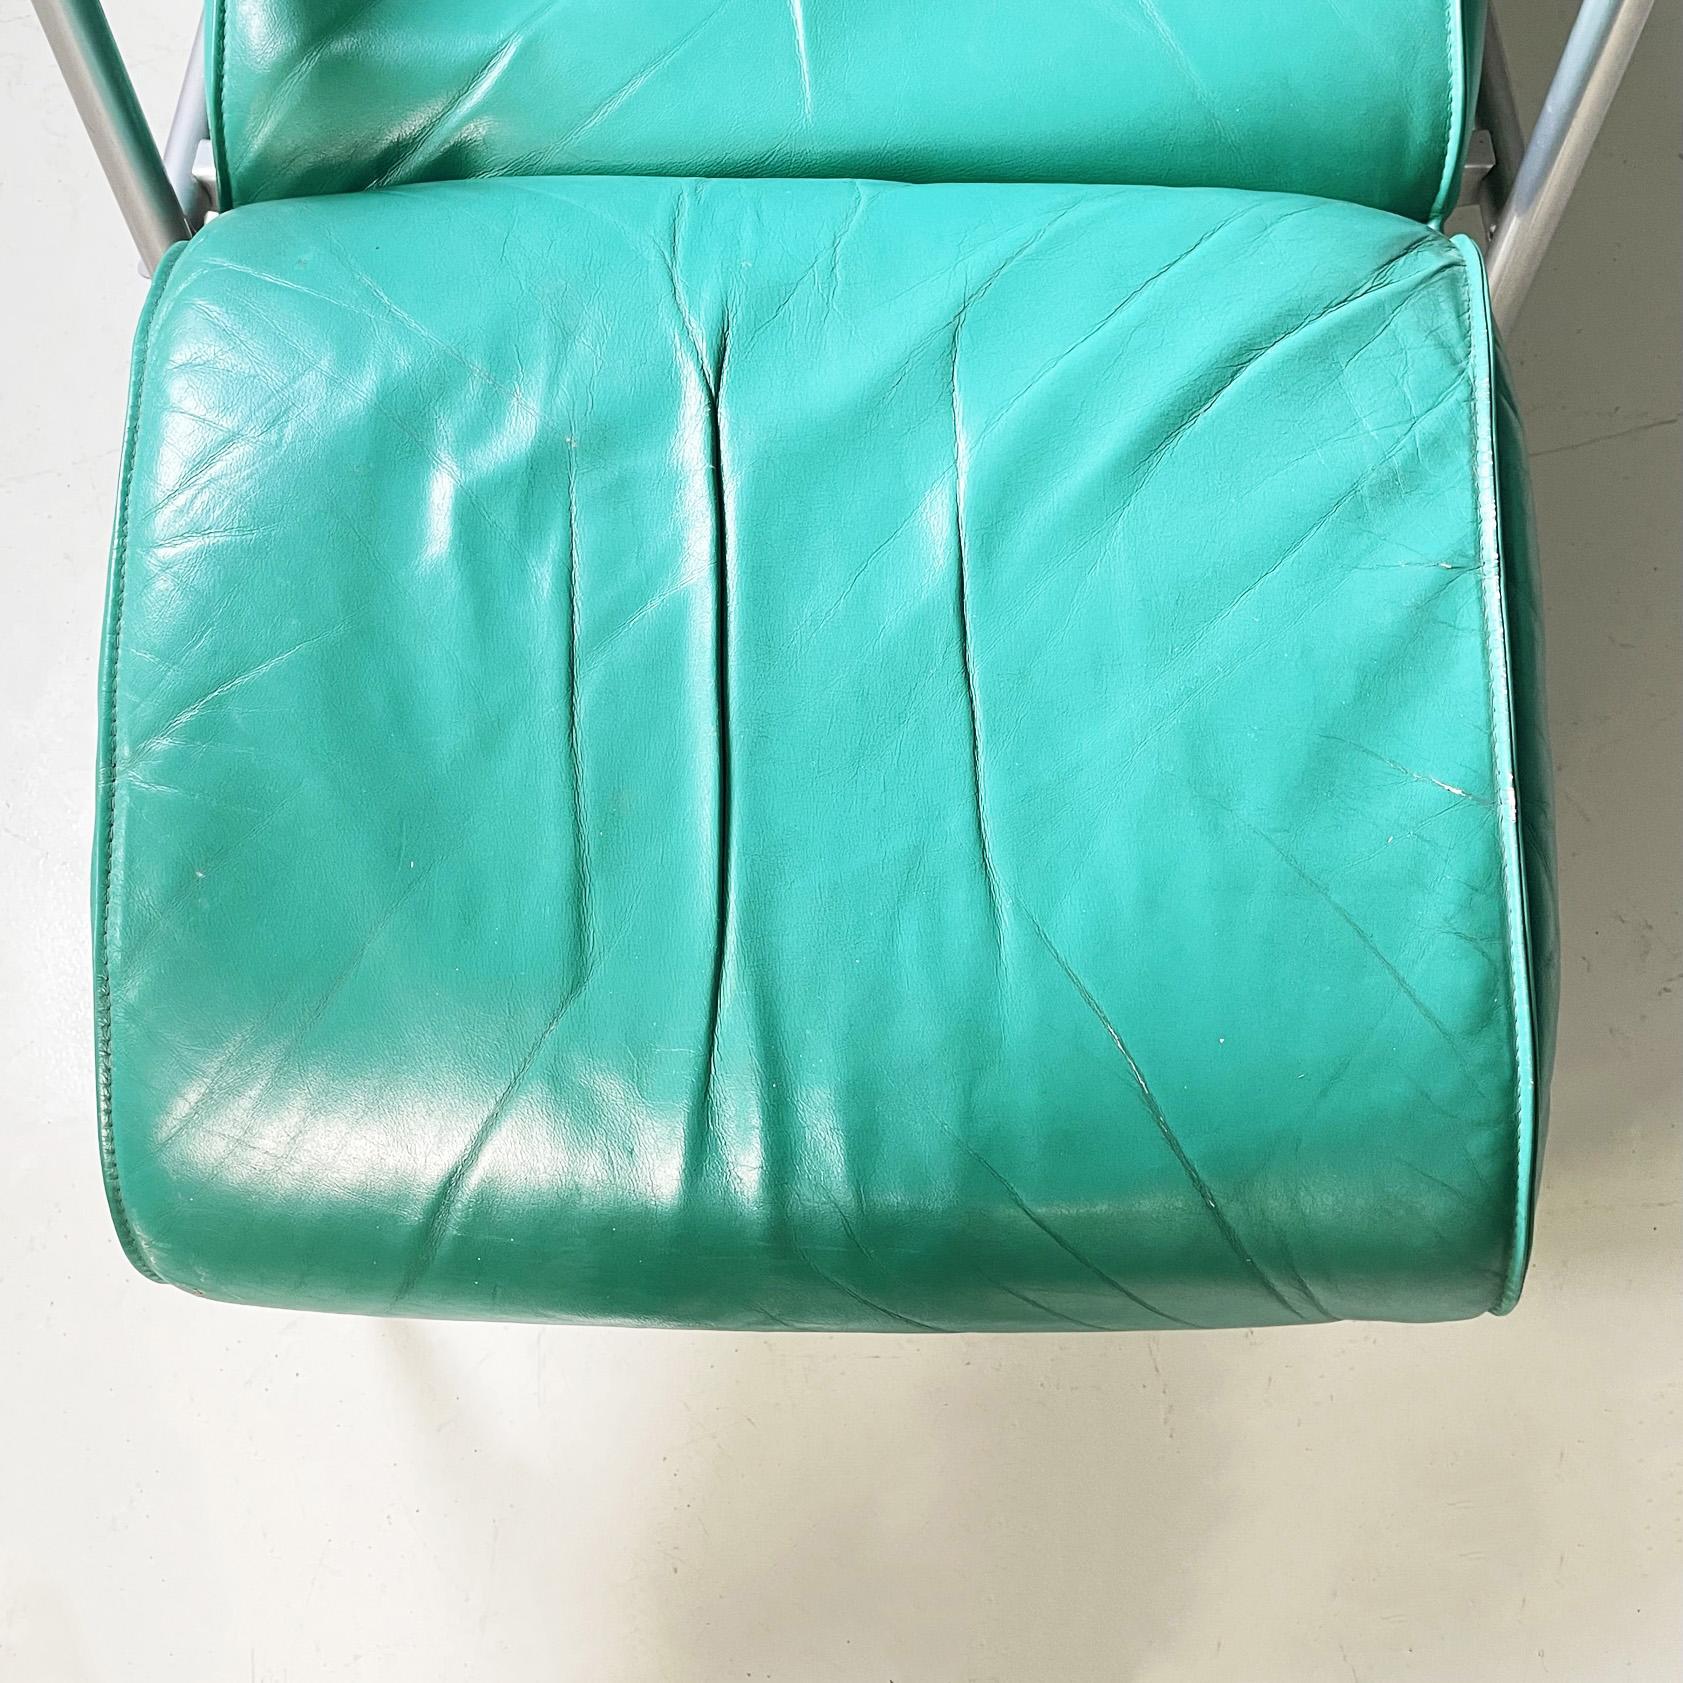 Moderner italienischer Sessel aus aquagrnem Leder, Holz und Metall, 1980er Jahre im Angebot 4